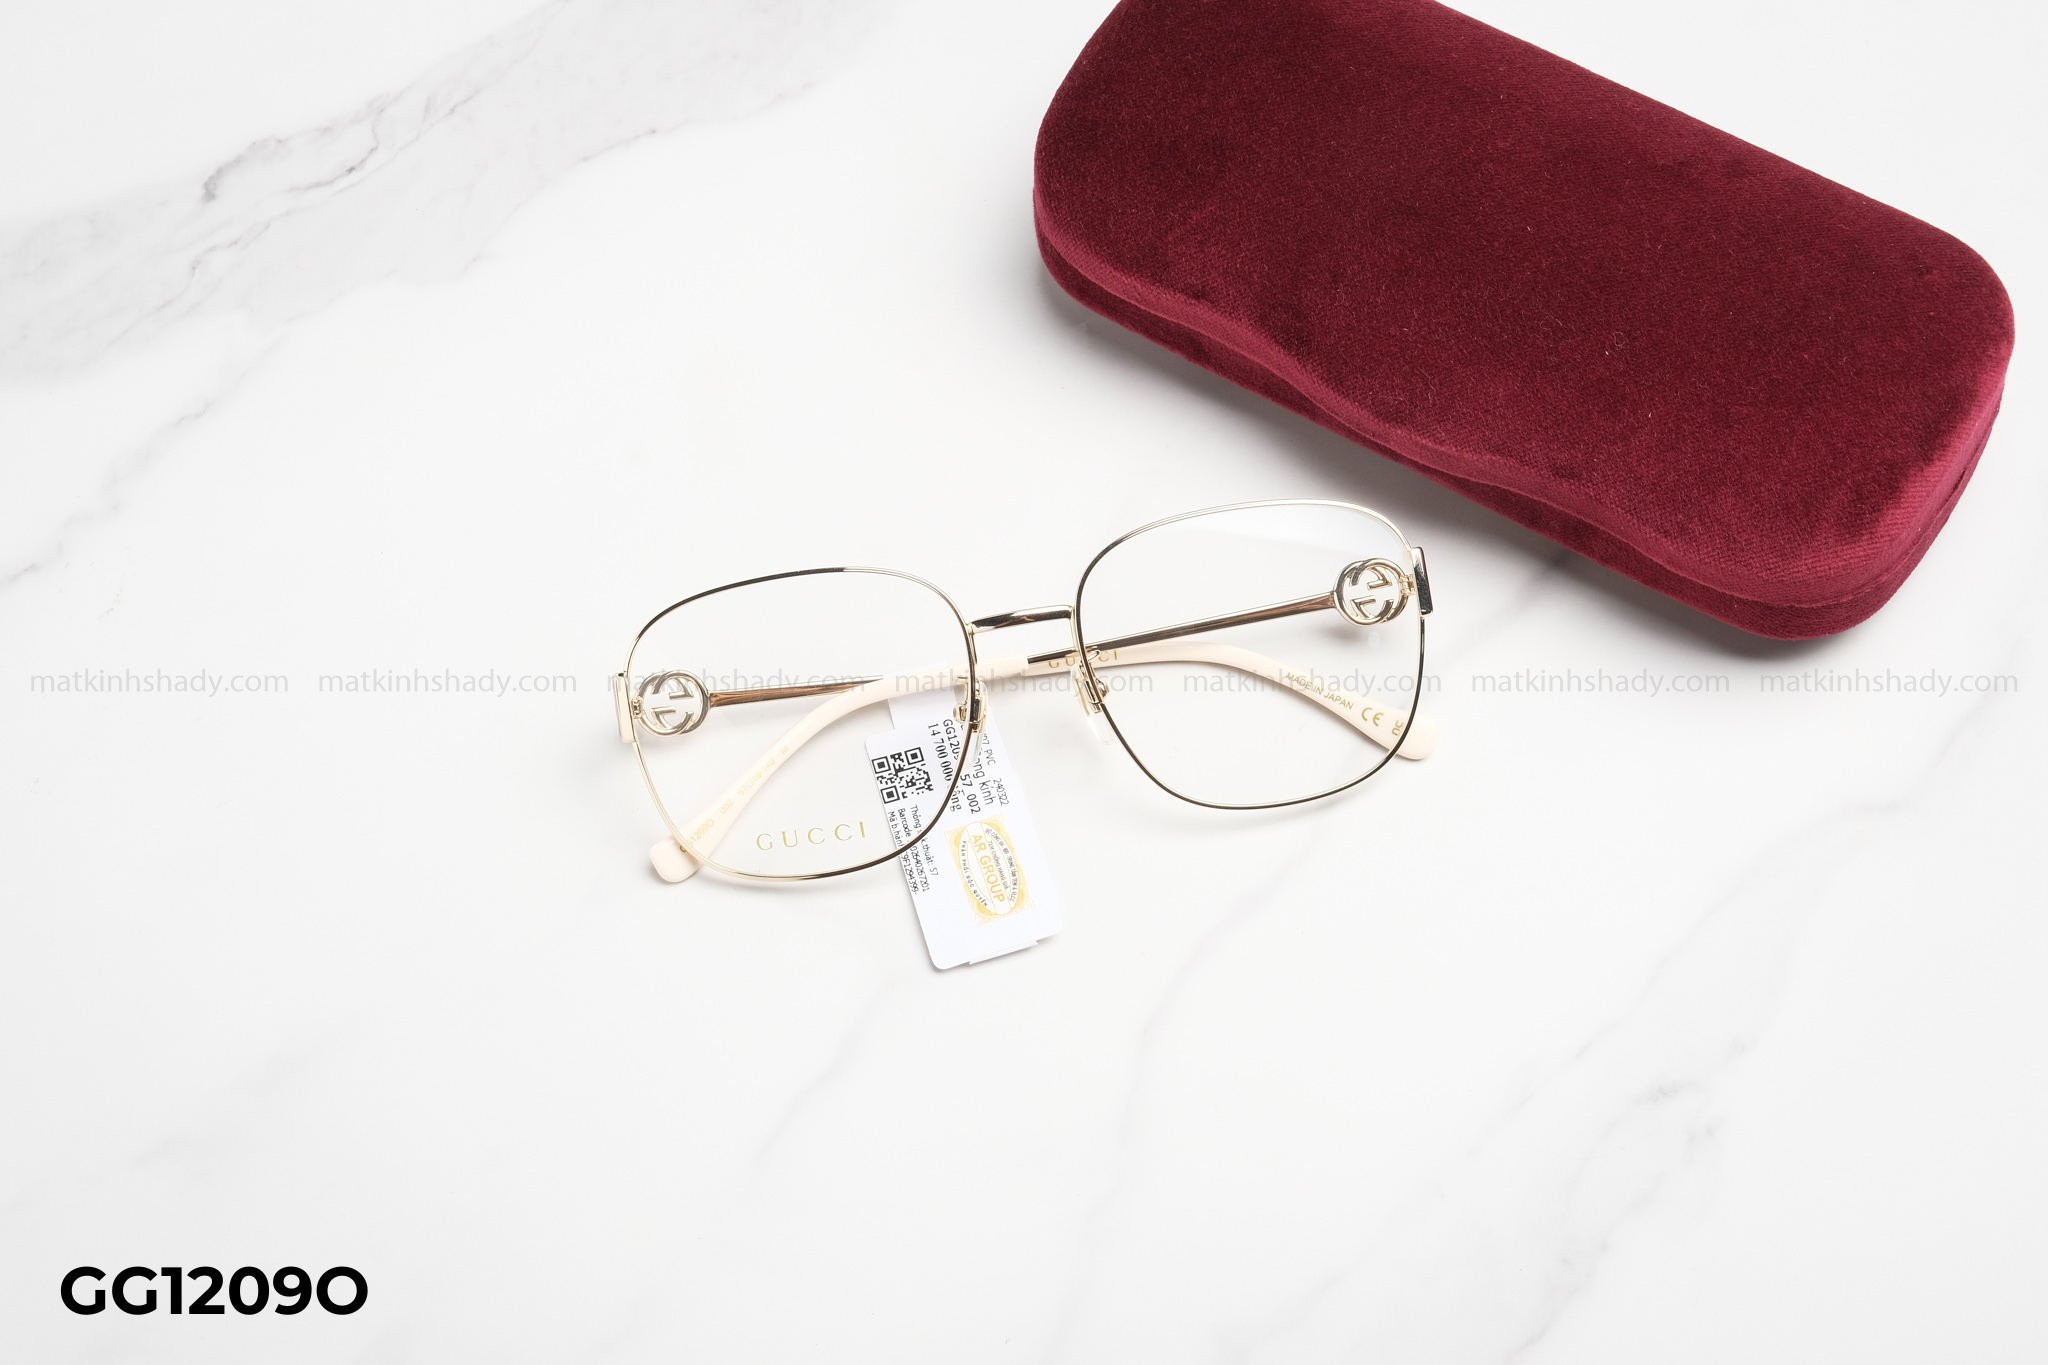  Gucci Eyewear - Glasses - GG1209O 